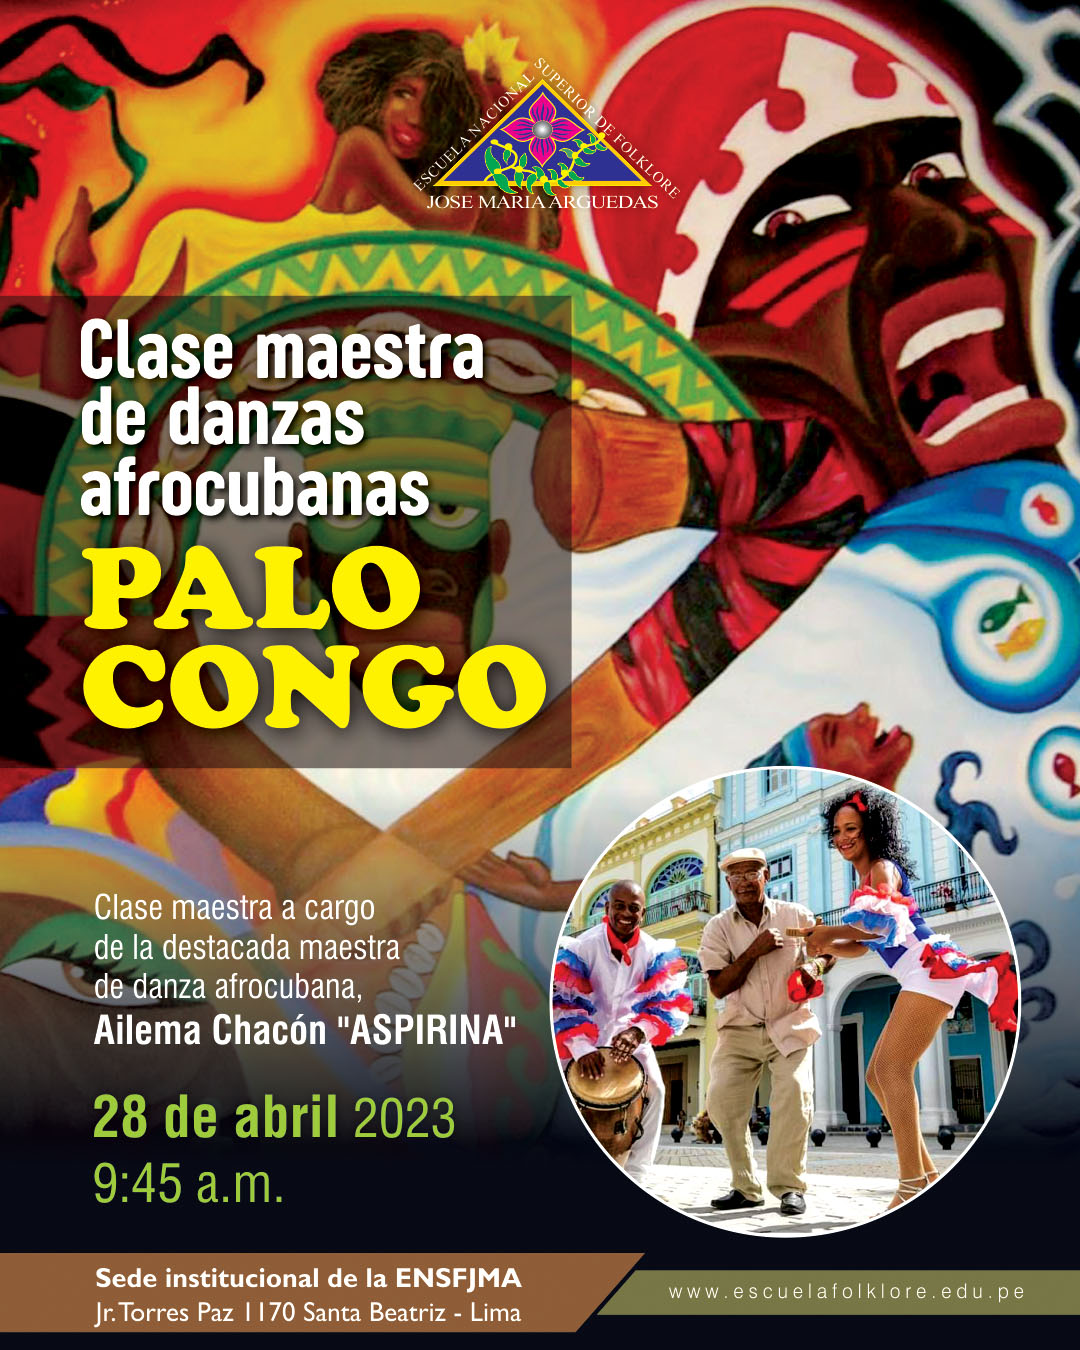 CLASE MAESTRA DE DANZA AFROCUBANA “PALO CONGO”